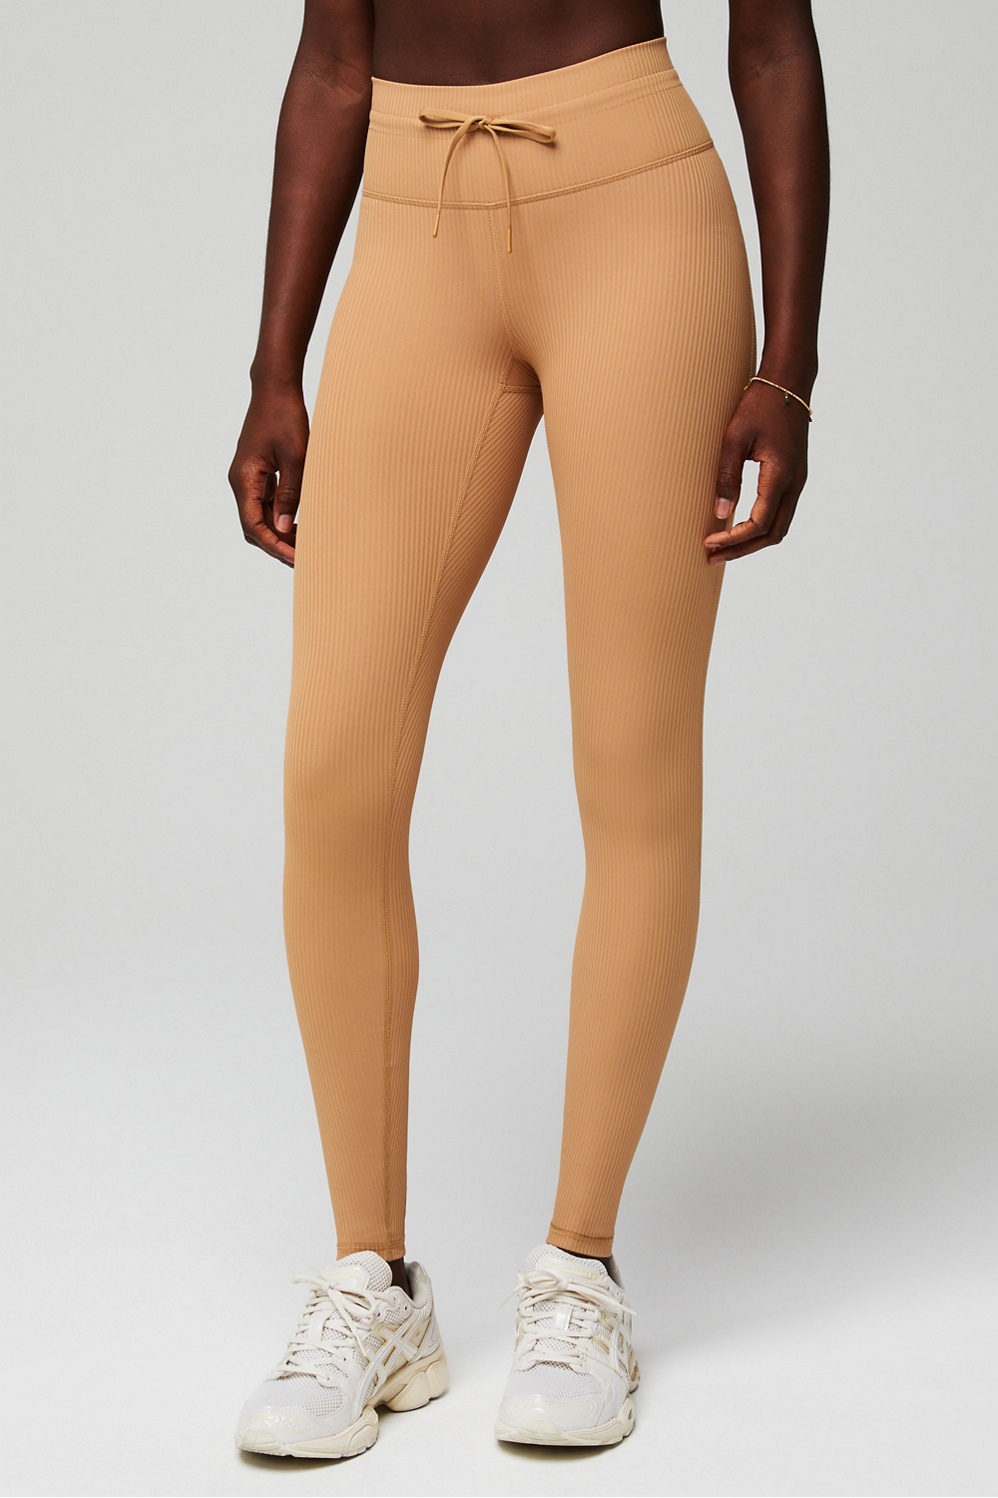 Sadelle - Asymmetrical Yoga Pants